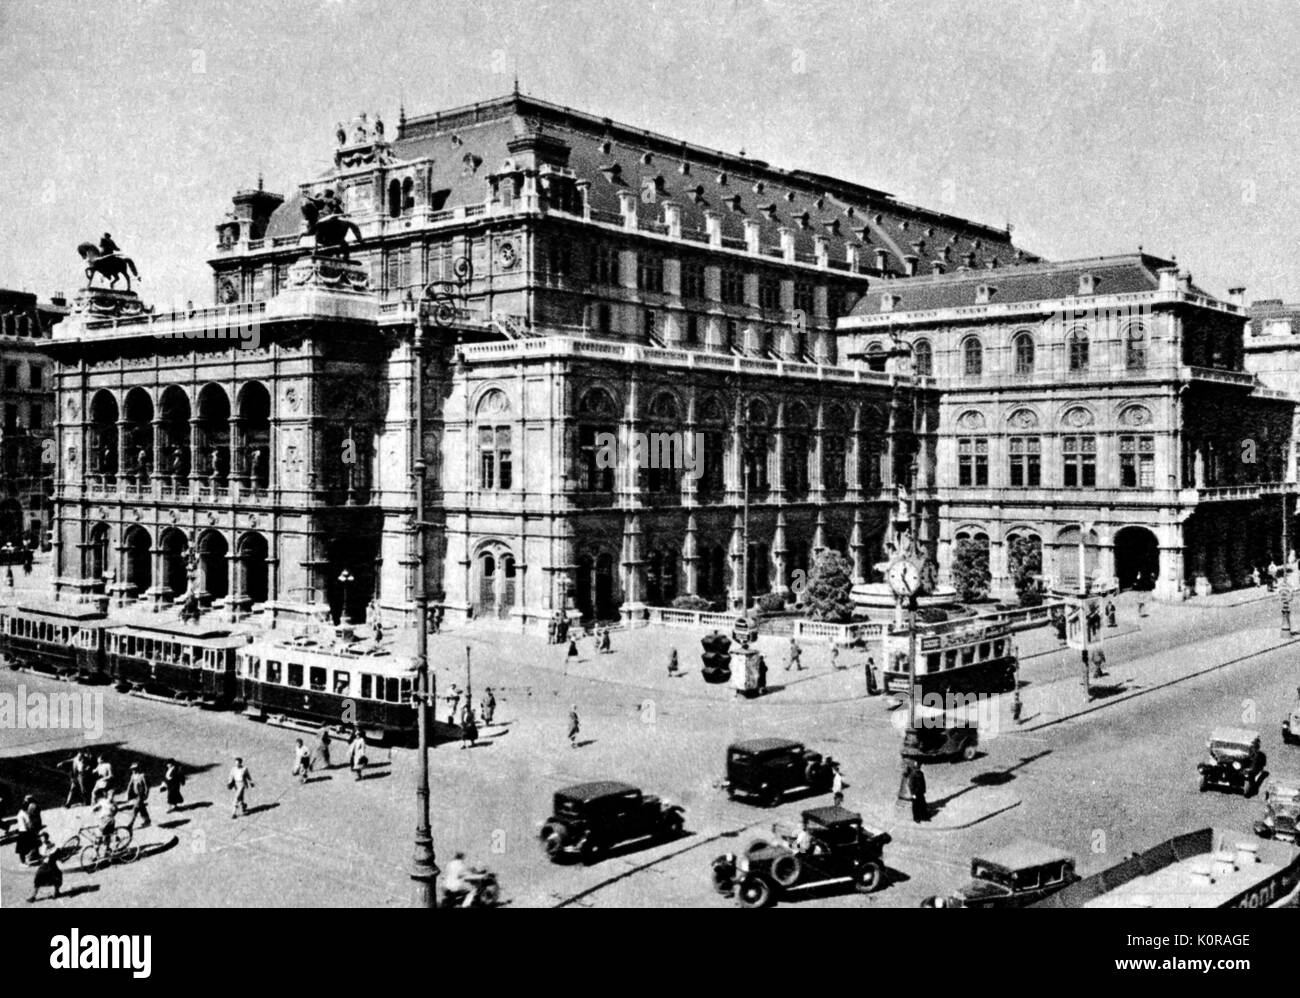 VIENNA. Staatsoper (State Opera), c.1920s. Opened in 1869. Directors: F. Schalk (1919-1924), C. Krauss (1929-1934), R. Strauss (joint director, 1919 - ). Stock Photo